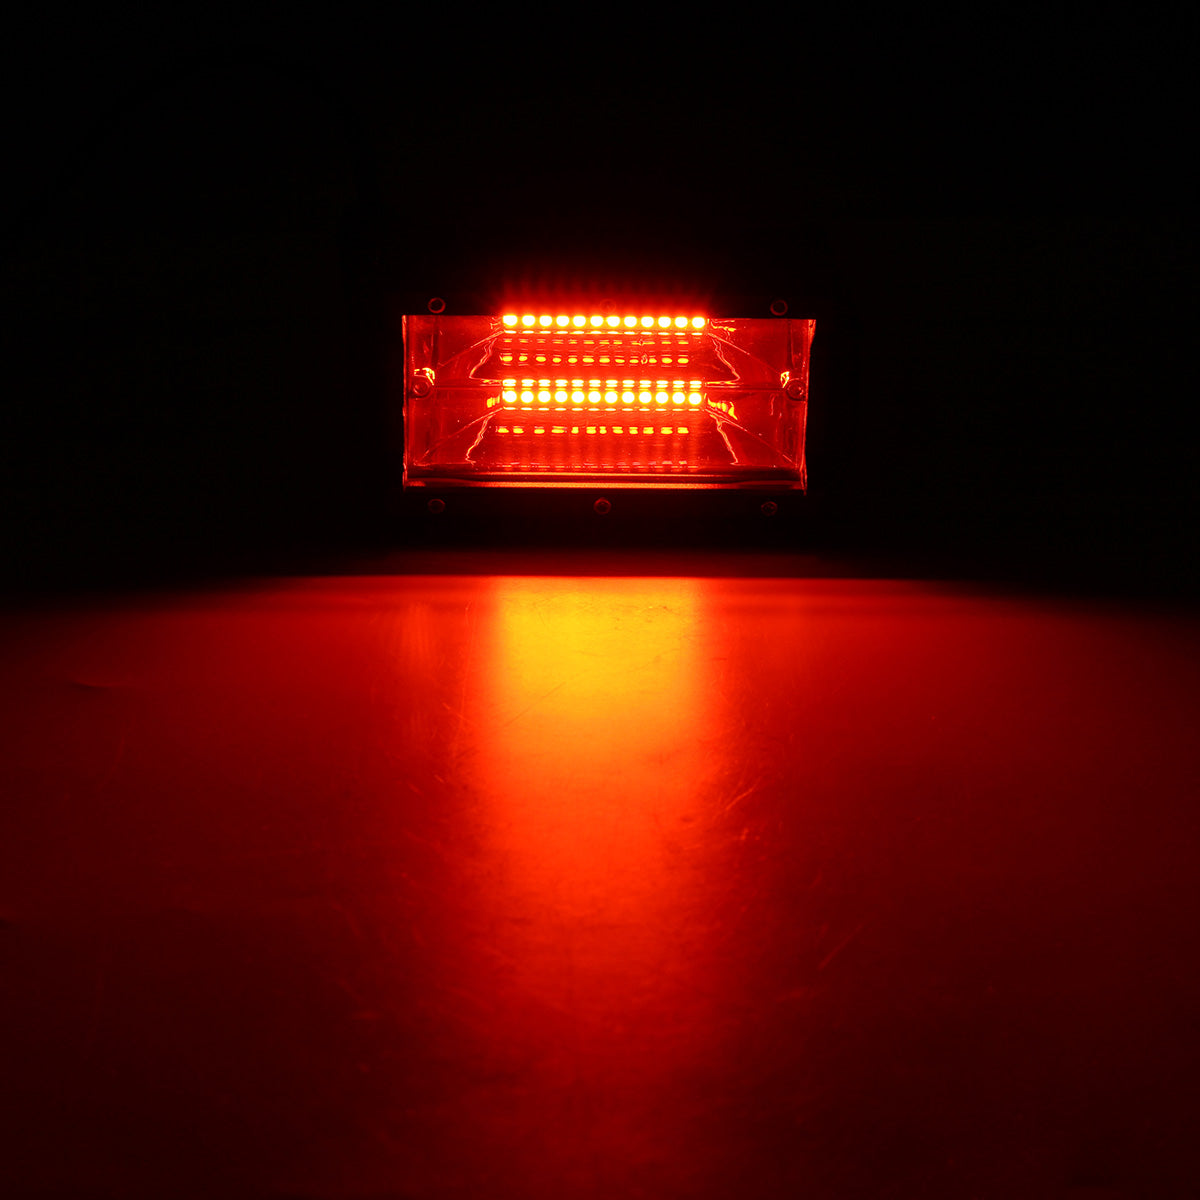 Orange Red 5Inch 48W 24 LED Work Light Bar Flood Beam Lamp for Car SUV Boat Driving Offroad ATV